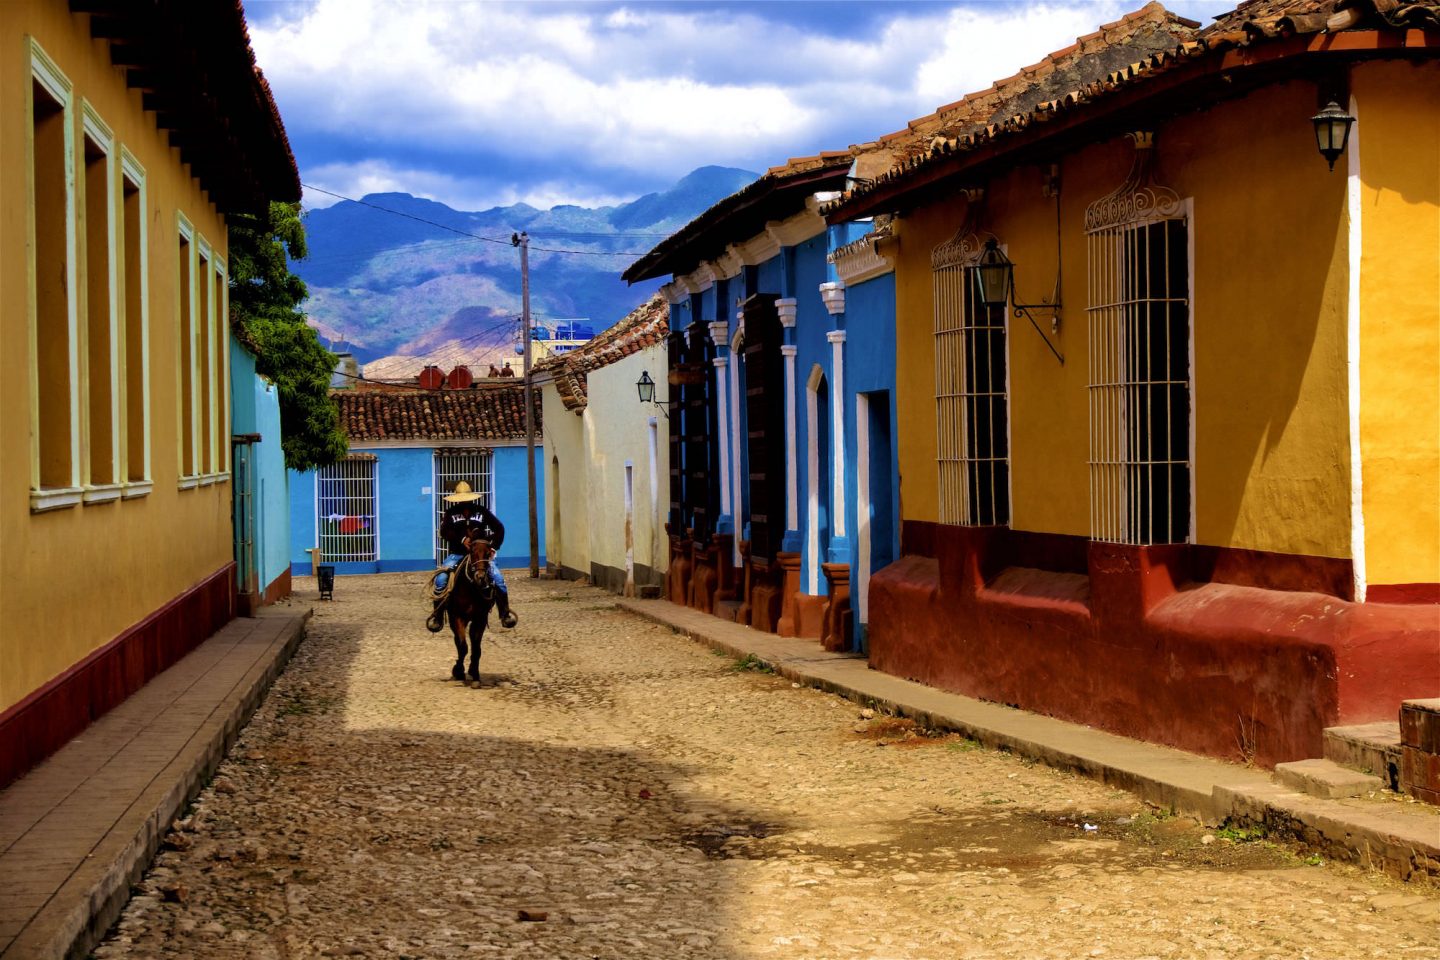 Cowboy riding down a street in Trinidad. Daily life in Cuba.